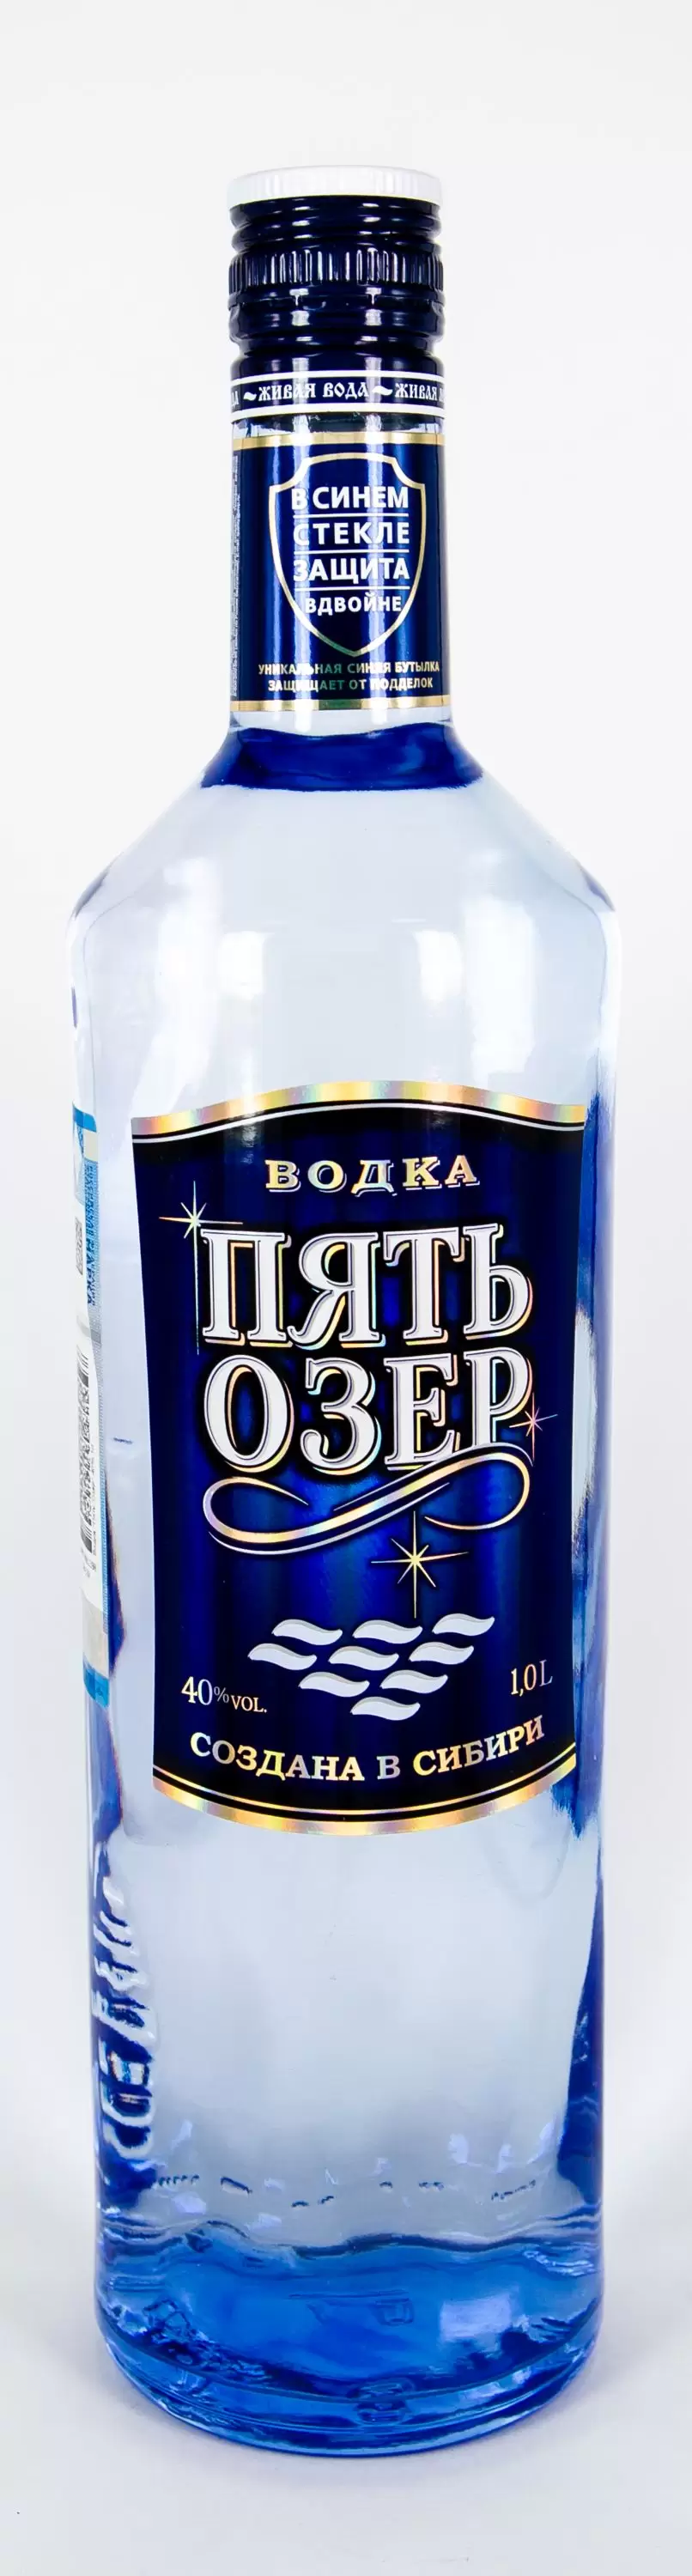 Бутылка 5 озер